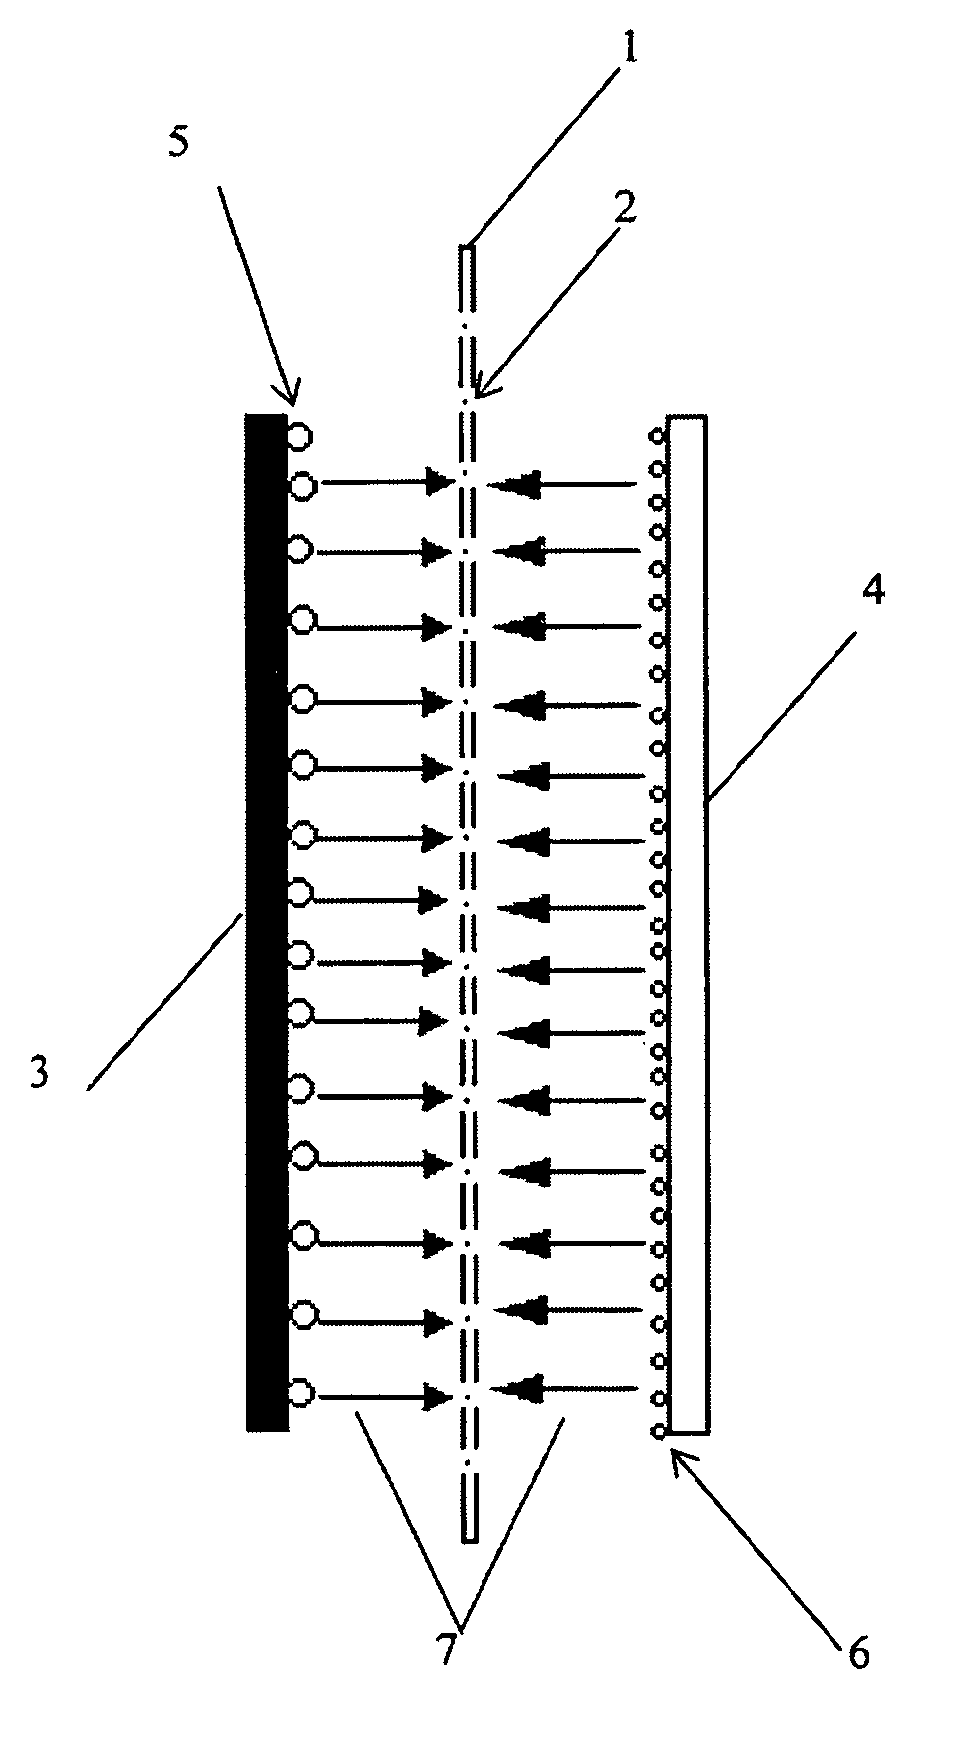 Composite membrane for a capacitor